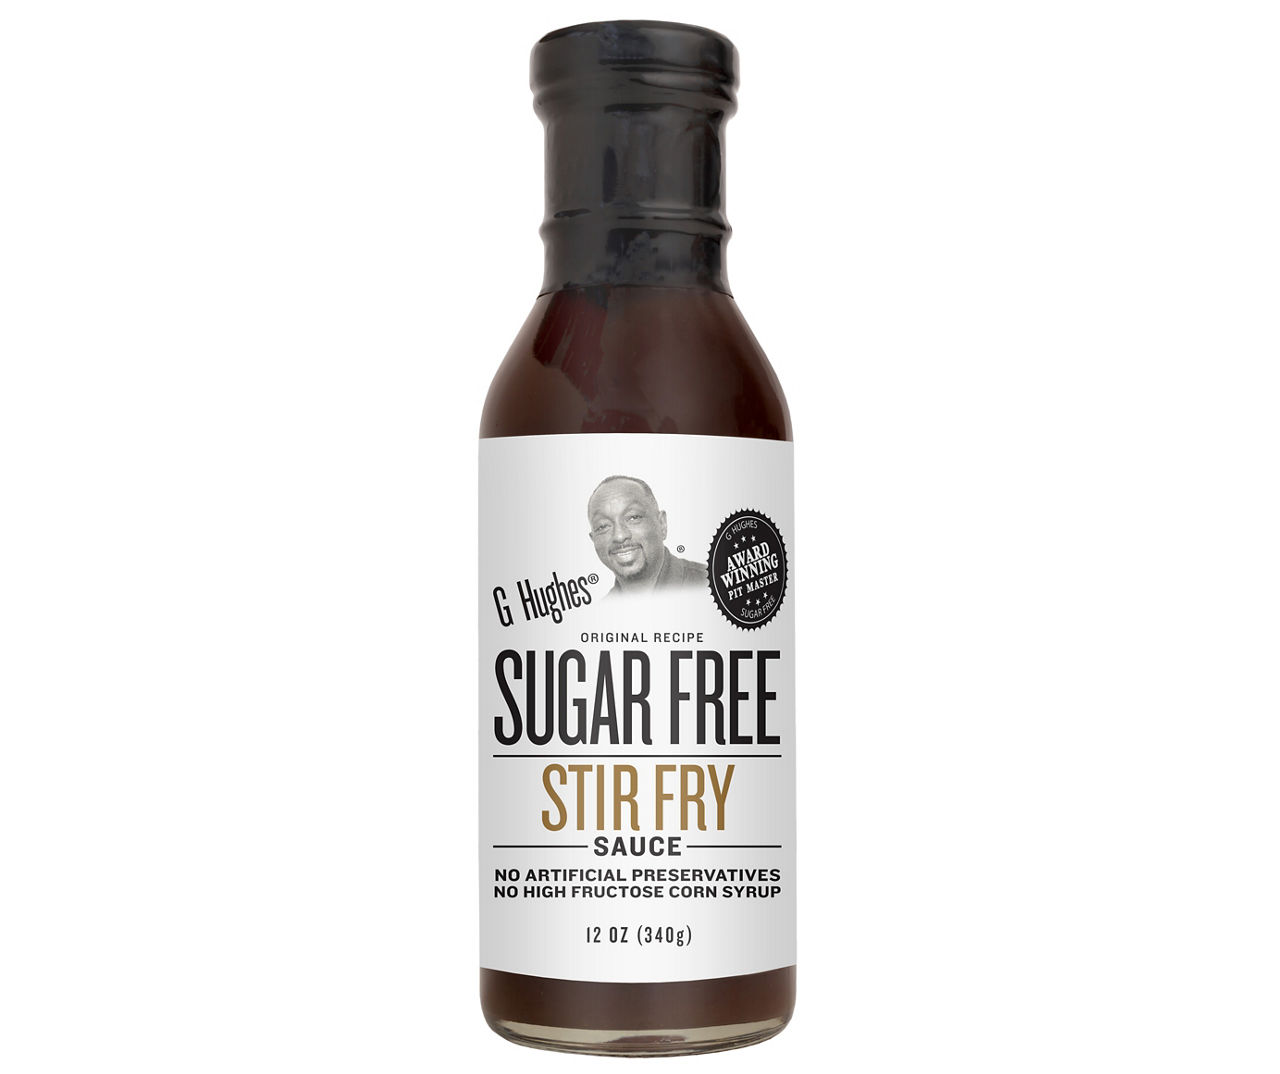 G Hughes Sugar Free Stir Fry Sauce, 18 Oz. | Big Lots